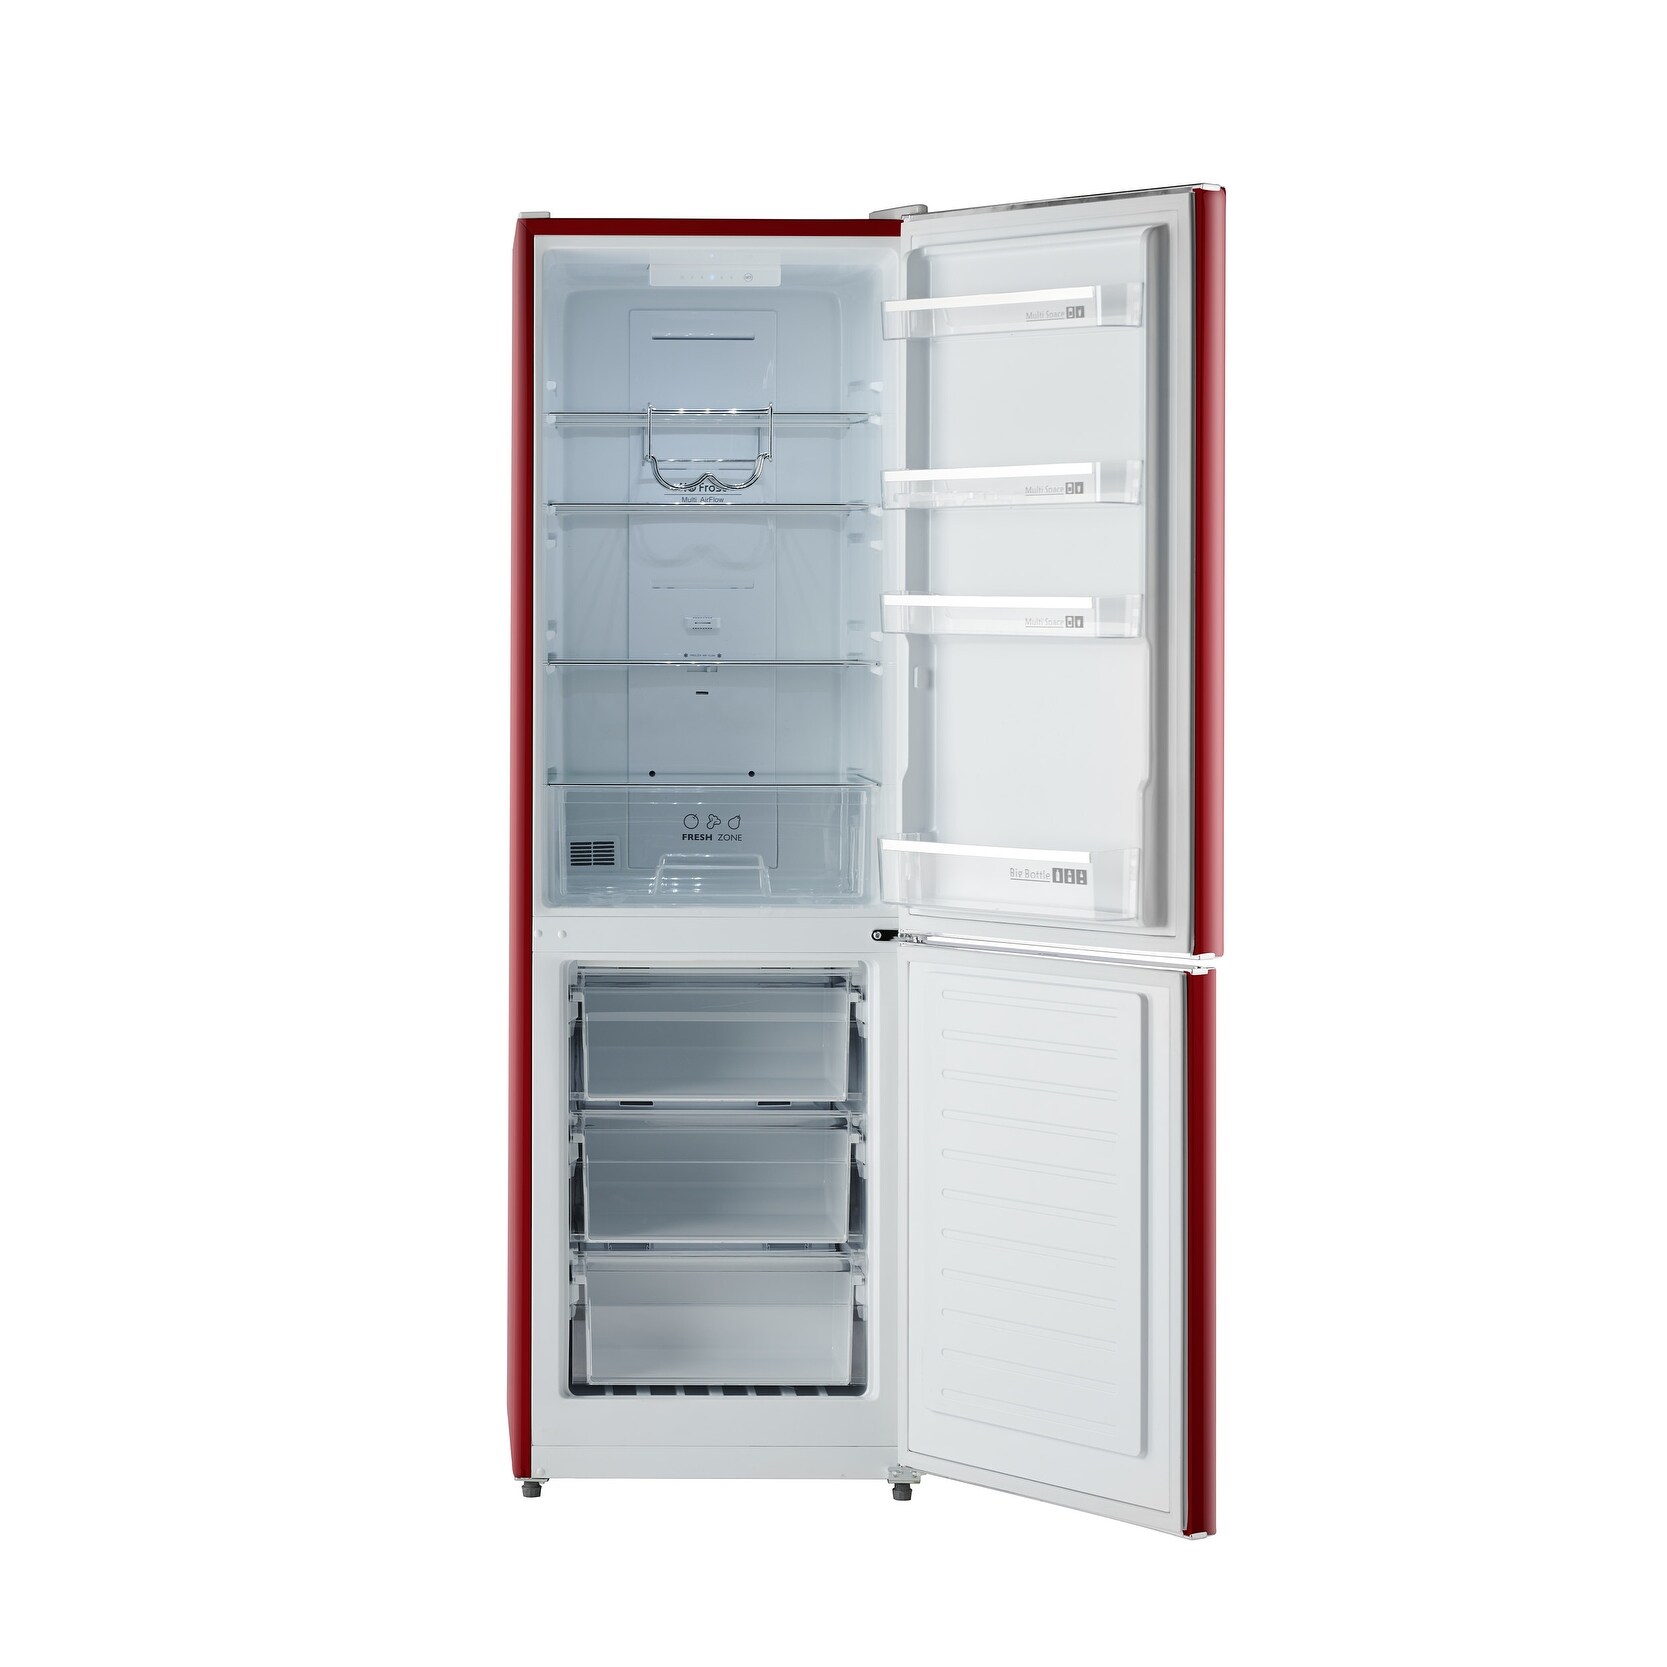  iio Retro Refrigerator Full Size with Bottom Freezer